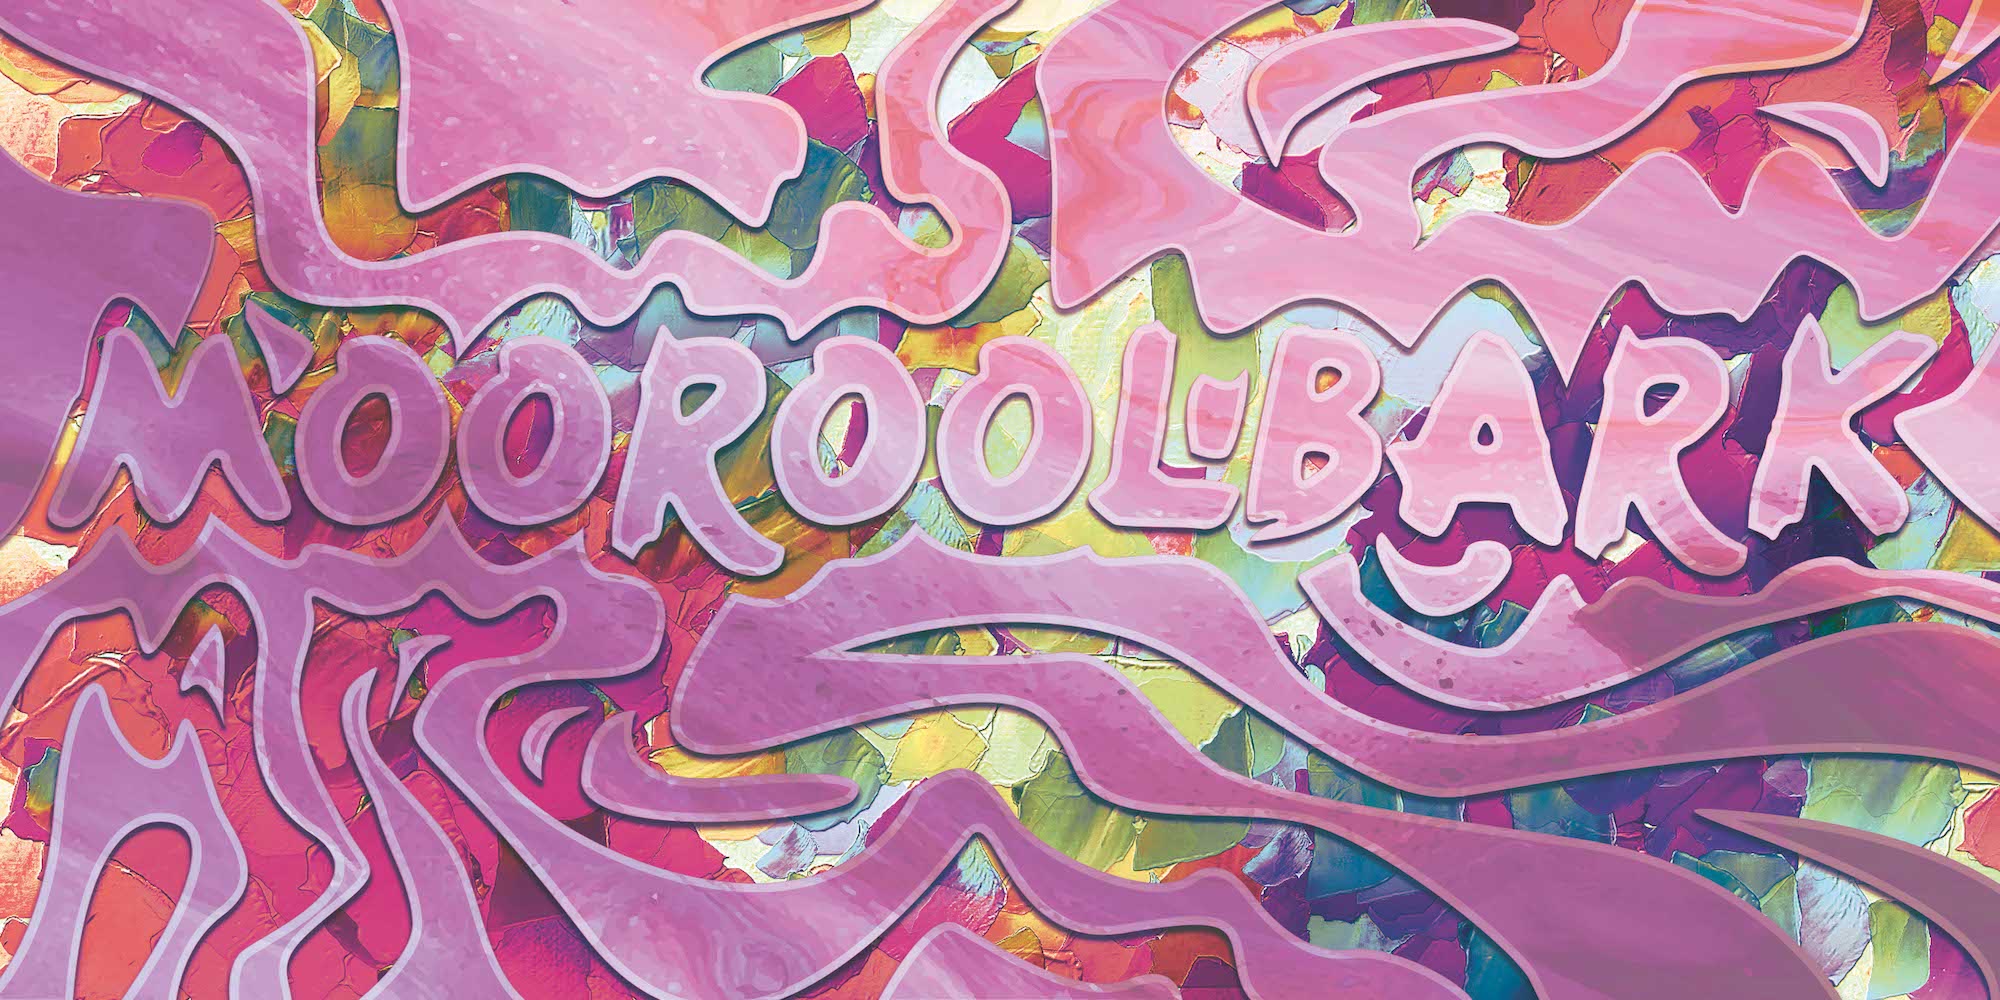 'Mooroolbark' artwork by Paul Sonsie, Digital Print on Aluminium, Street Art Panel, 2019.